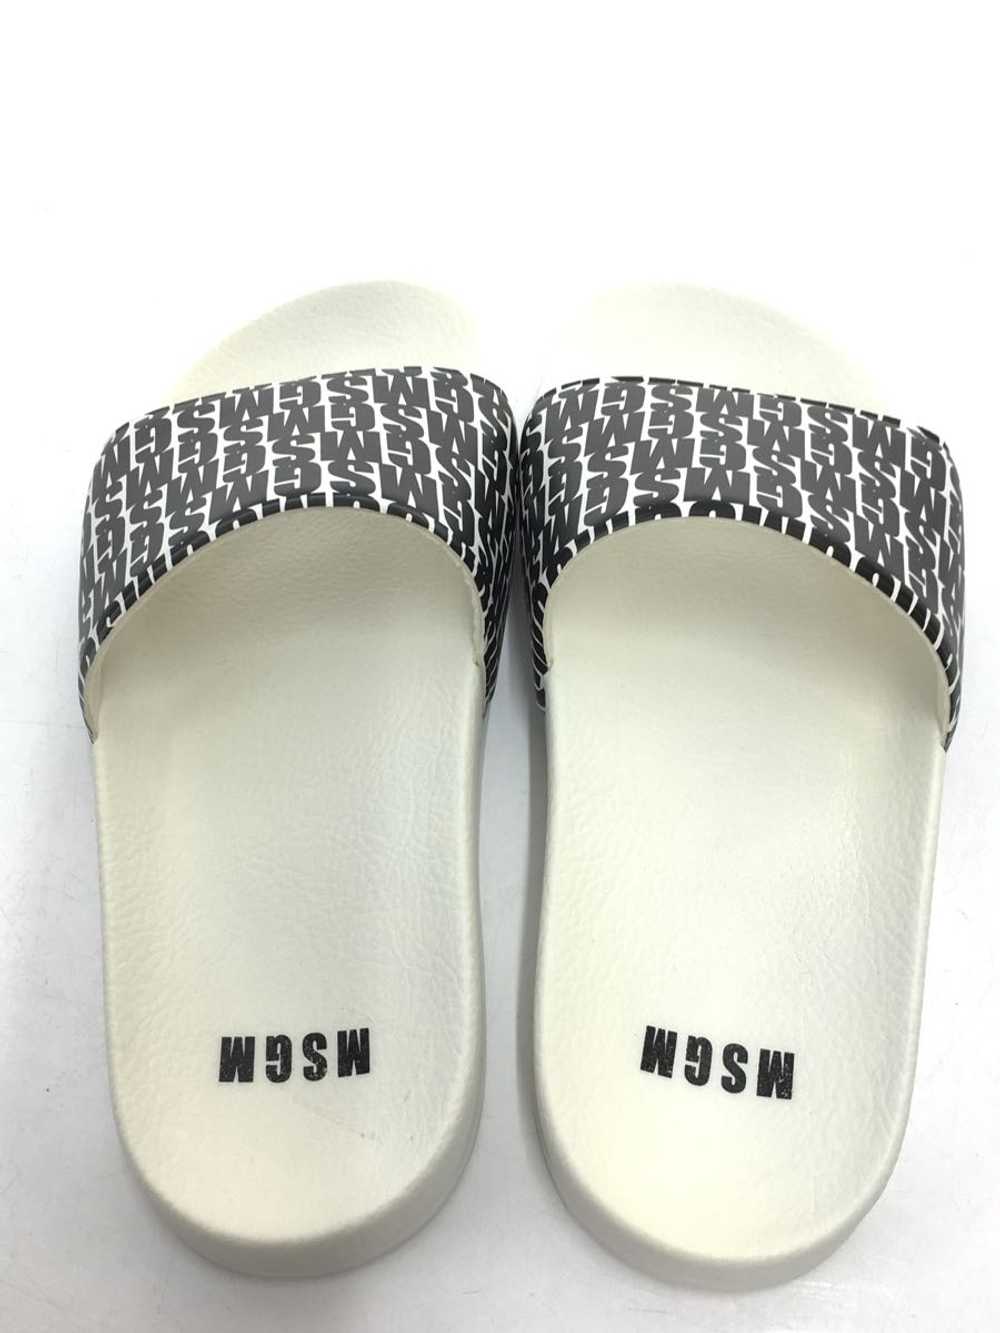 Msgm Sandals/37/White/Pool-Slide Shoes BLp96 - image 3